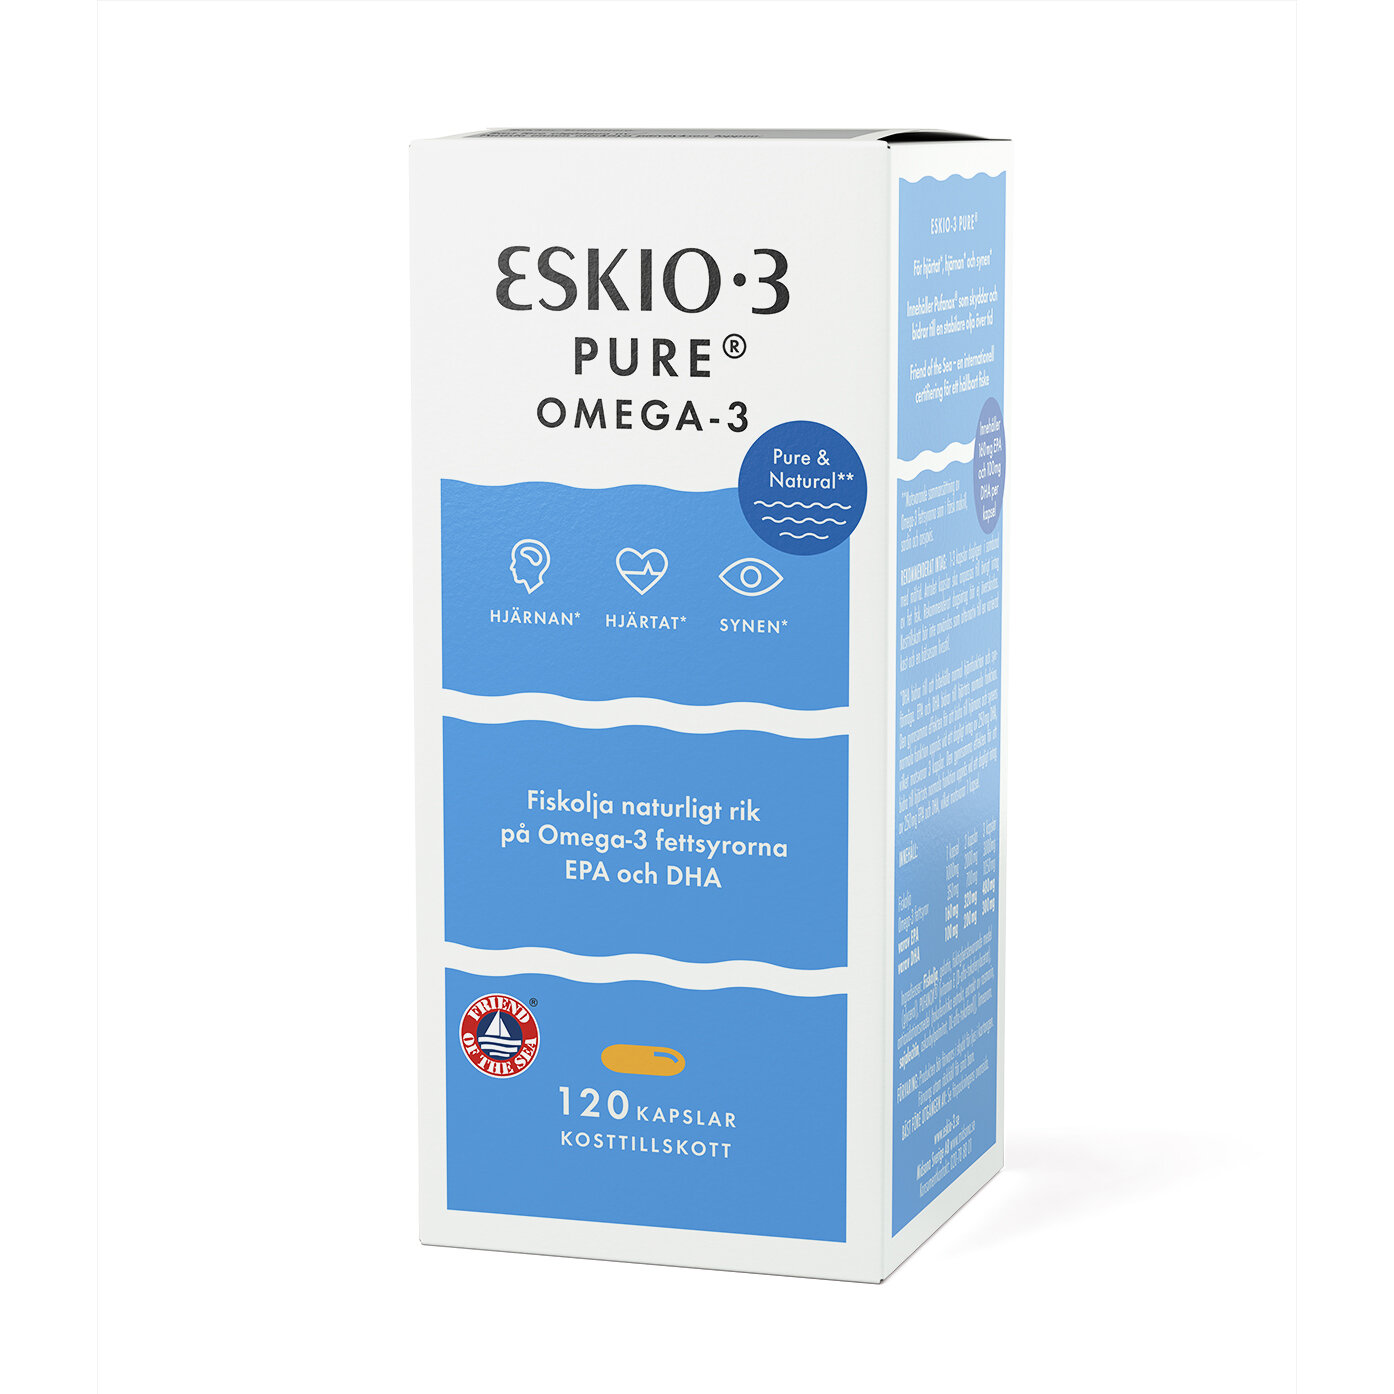 Eskio-3 Pure Omega-3 120 kaps